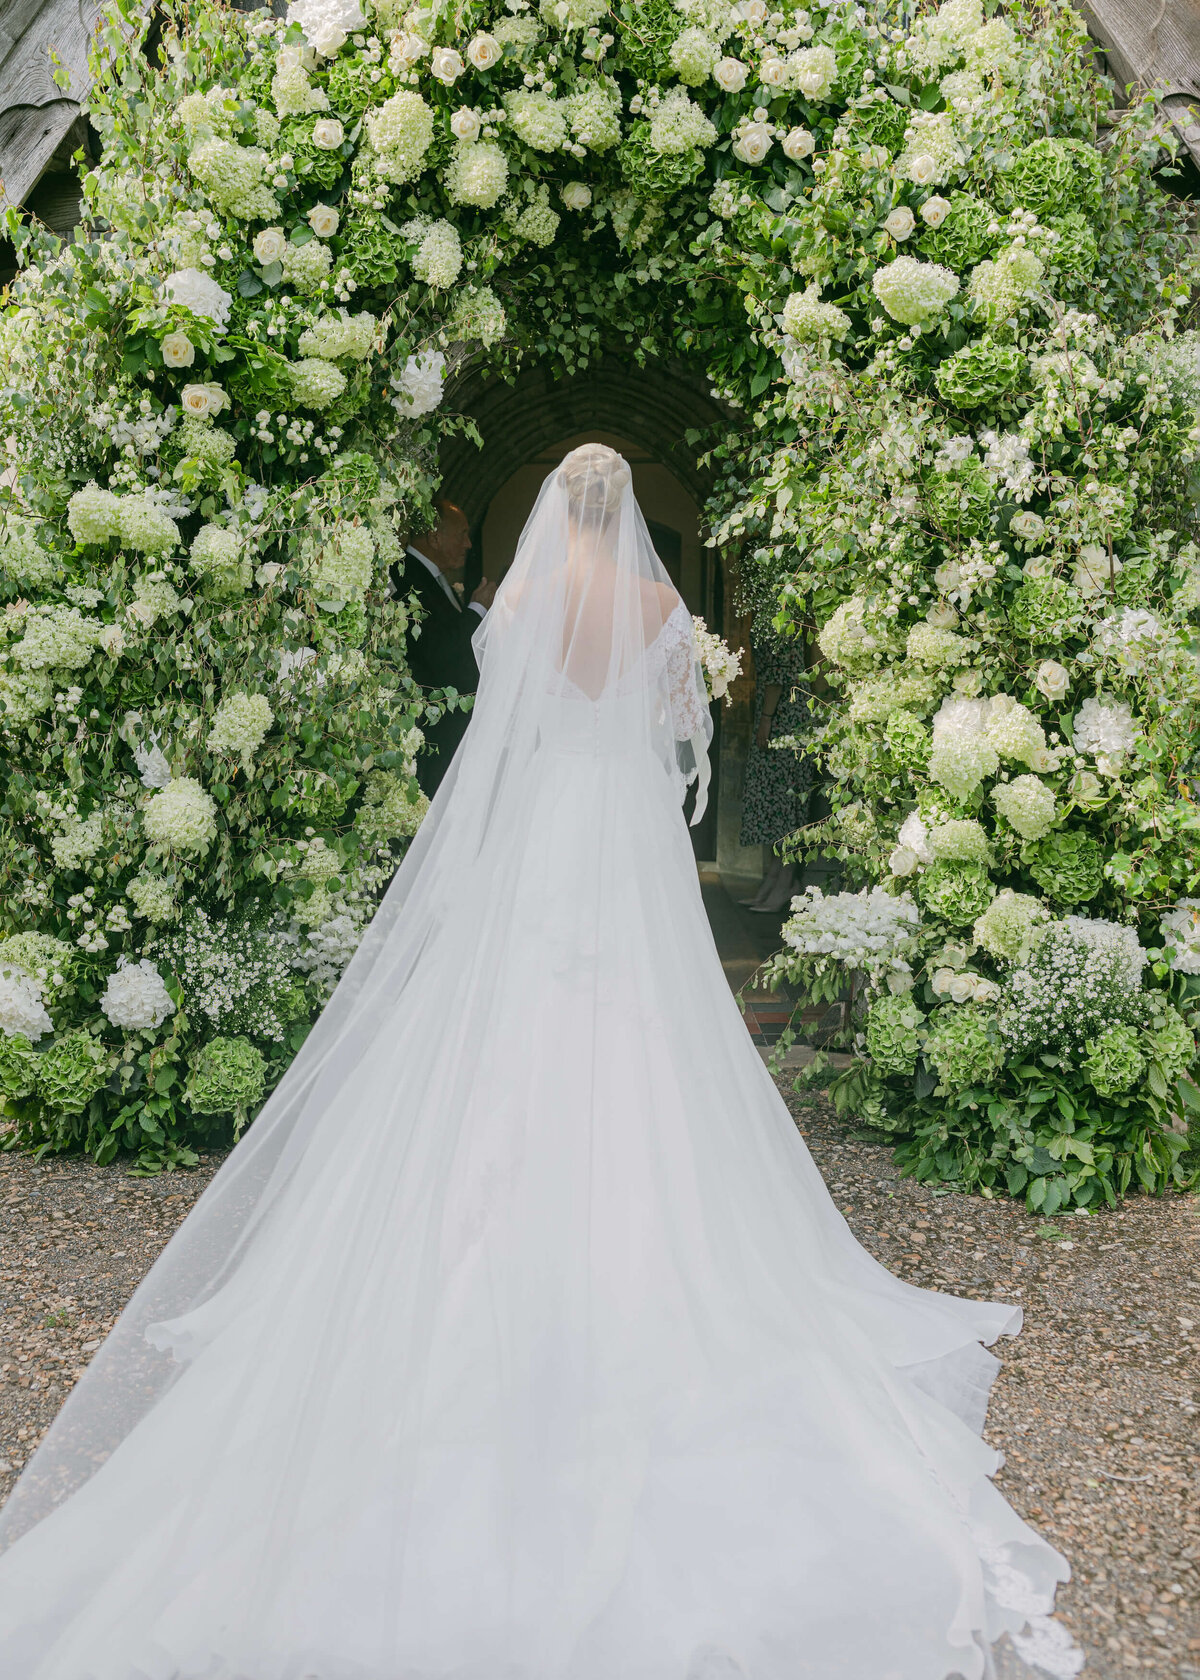 chloe-winstanley-weddings-suzanne-neville-church-veil-flower-arch